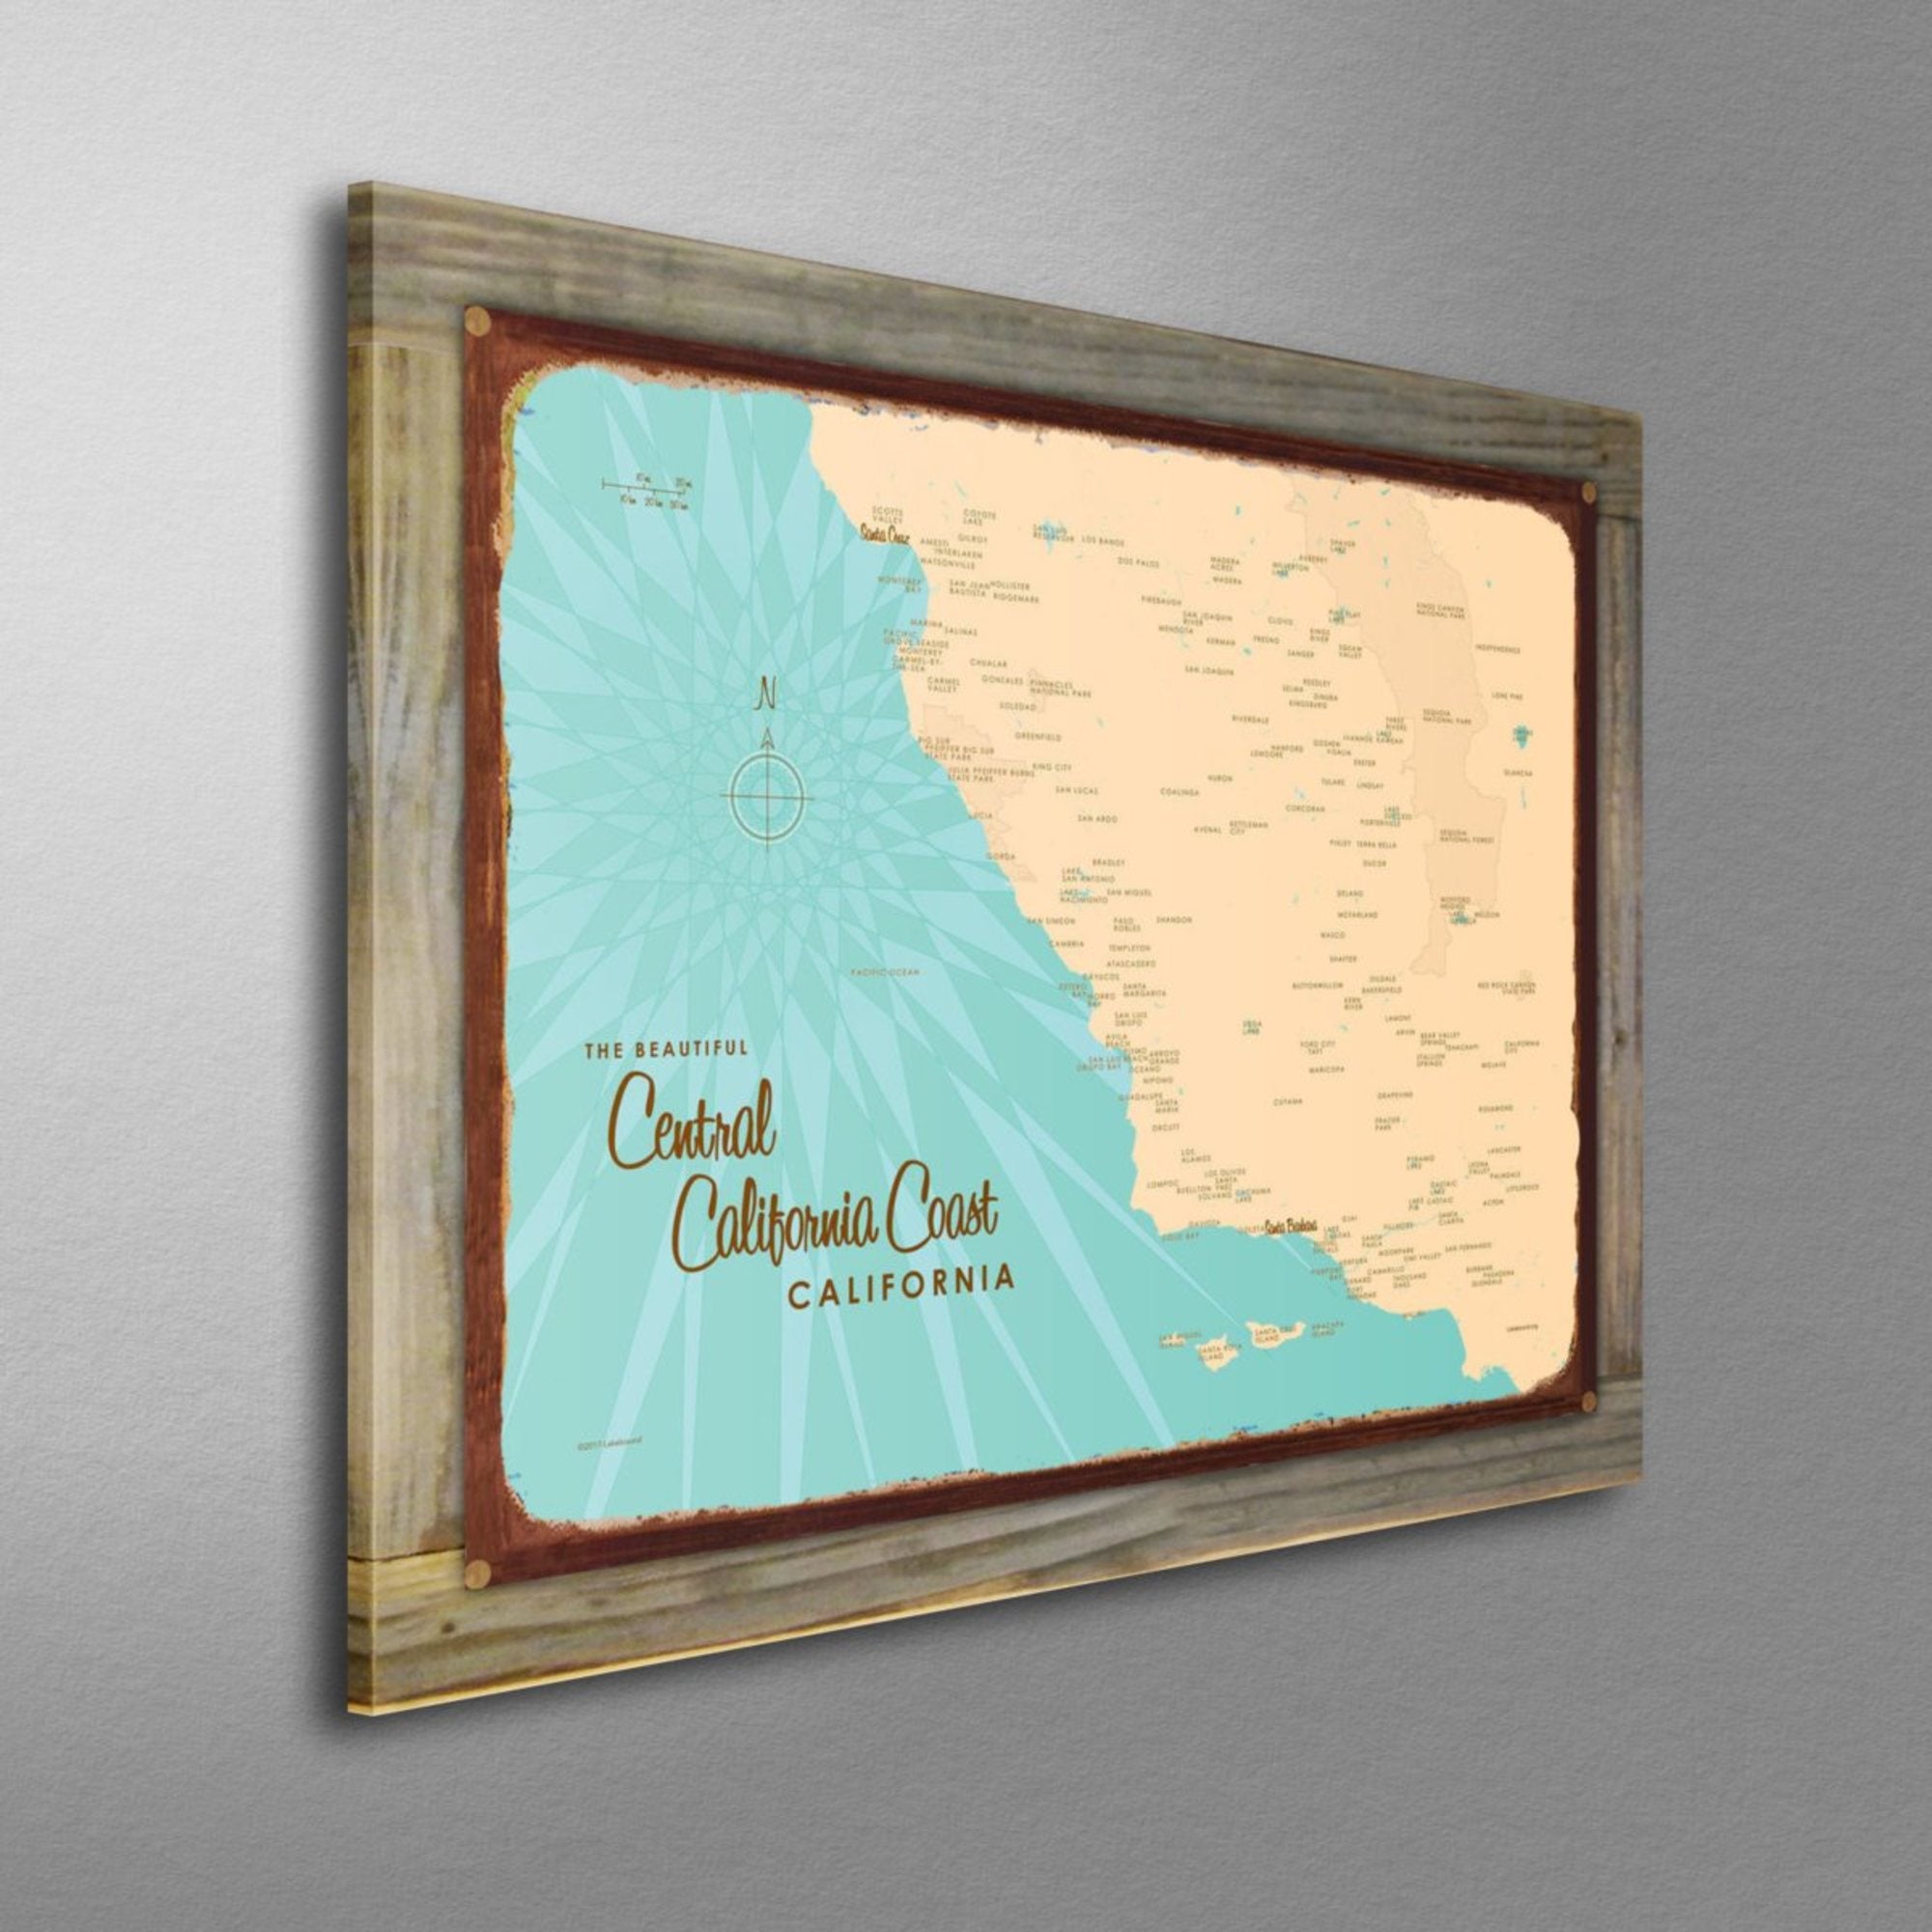 Central California Coast, Wood-Mounted Rustic Metal Sign Map Art